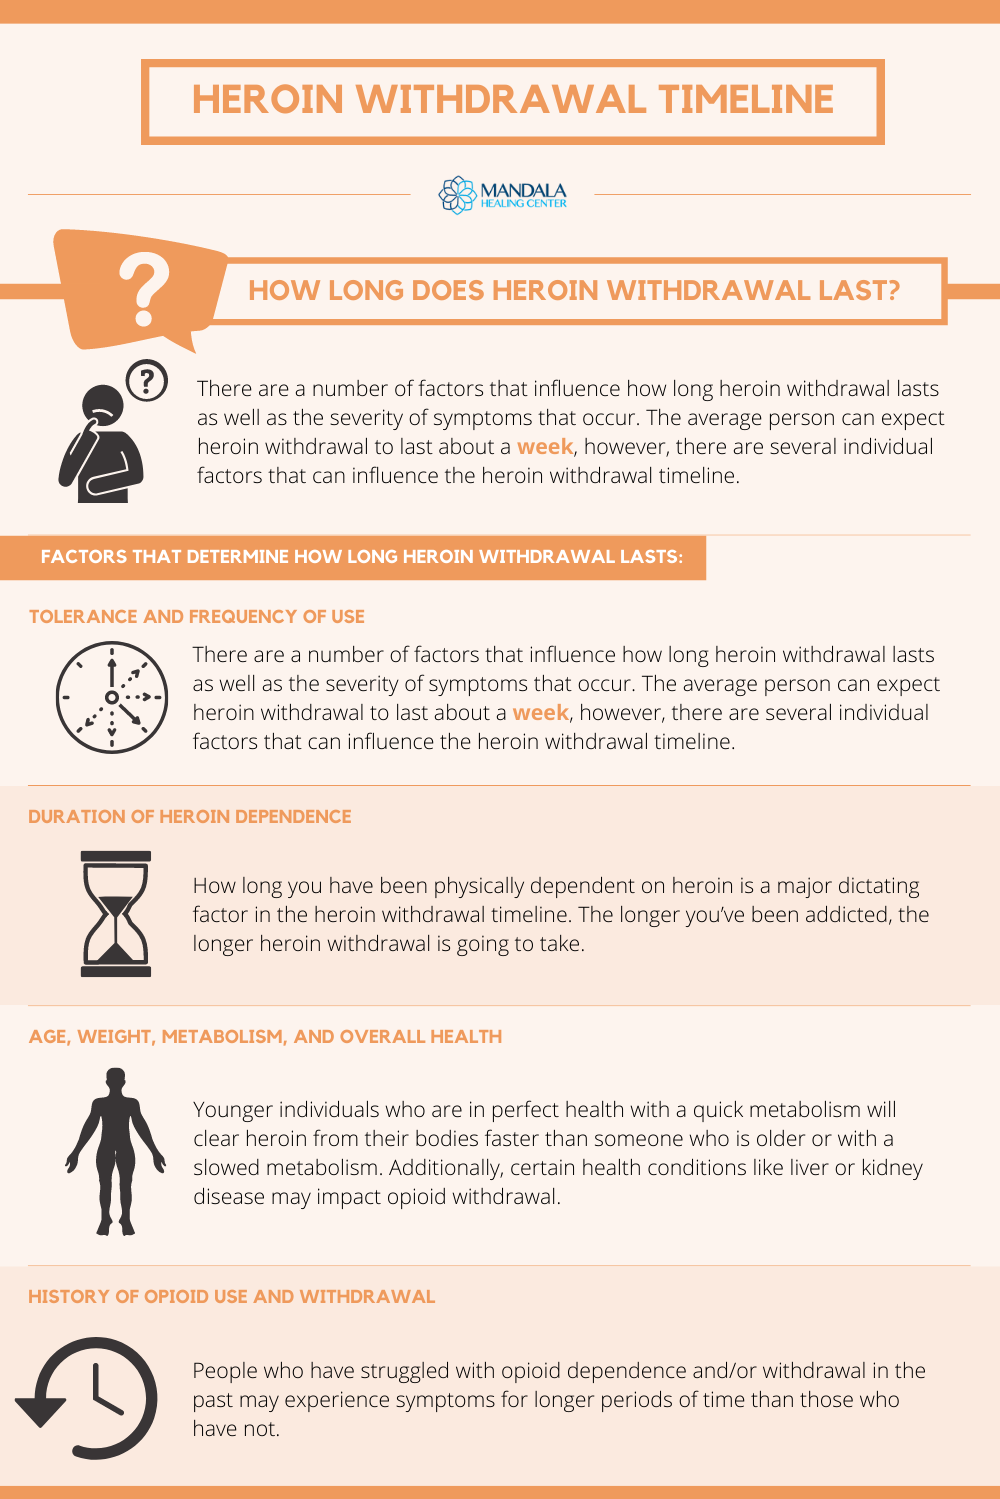 Factors That Determine How Long Heroin Withdrawal Lasts